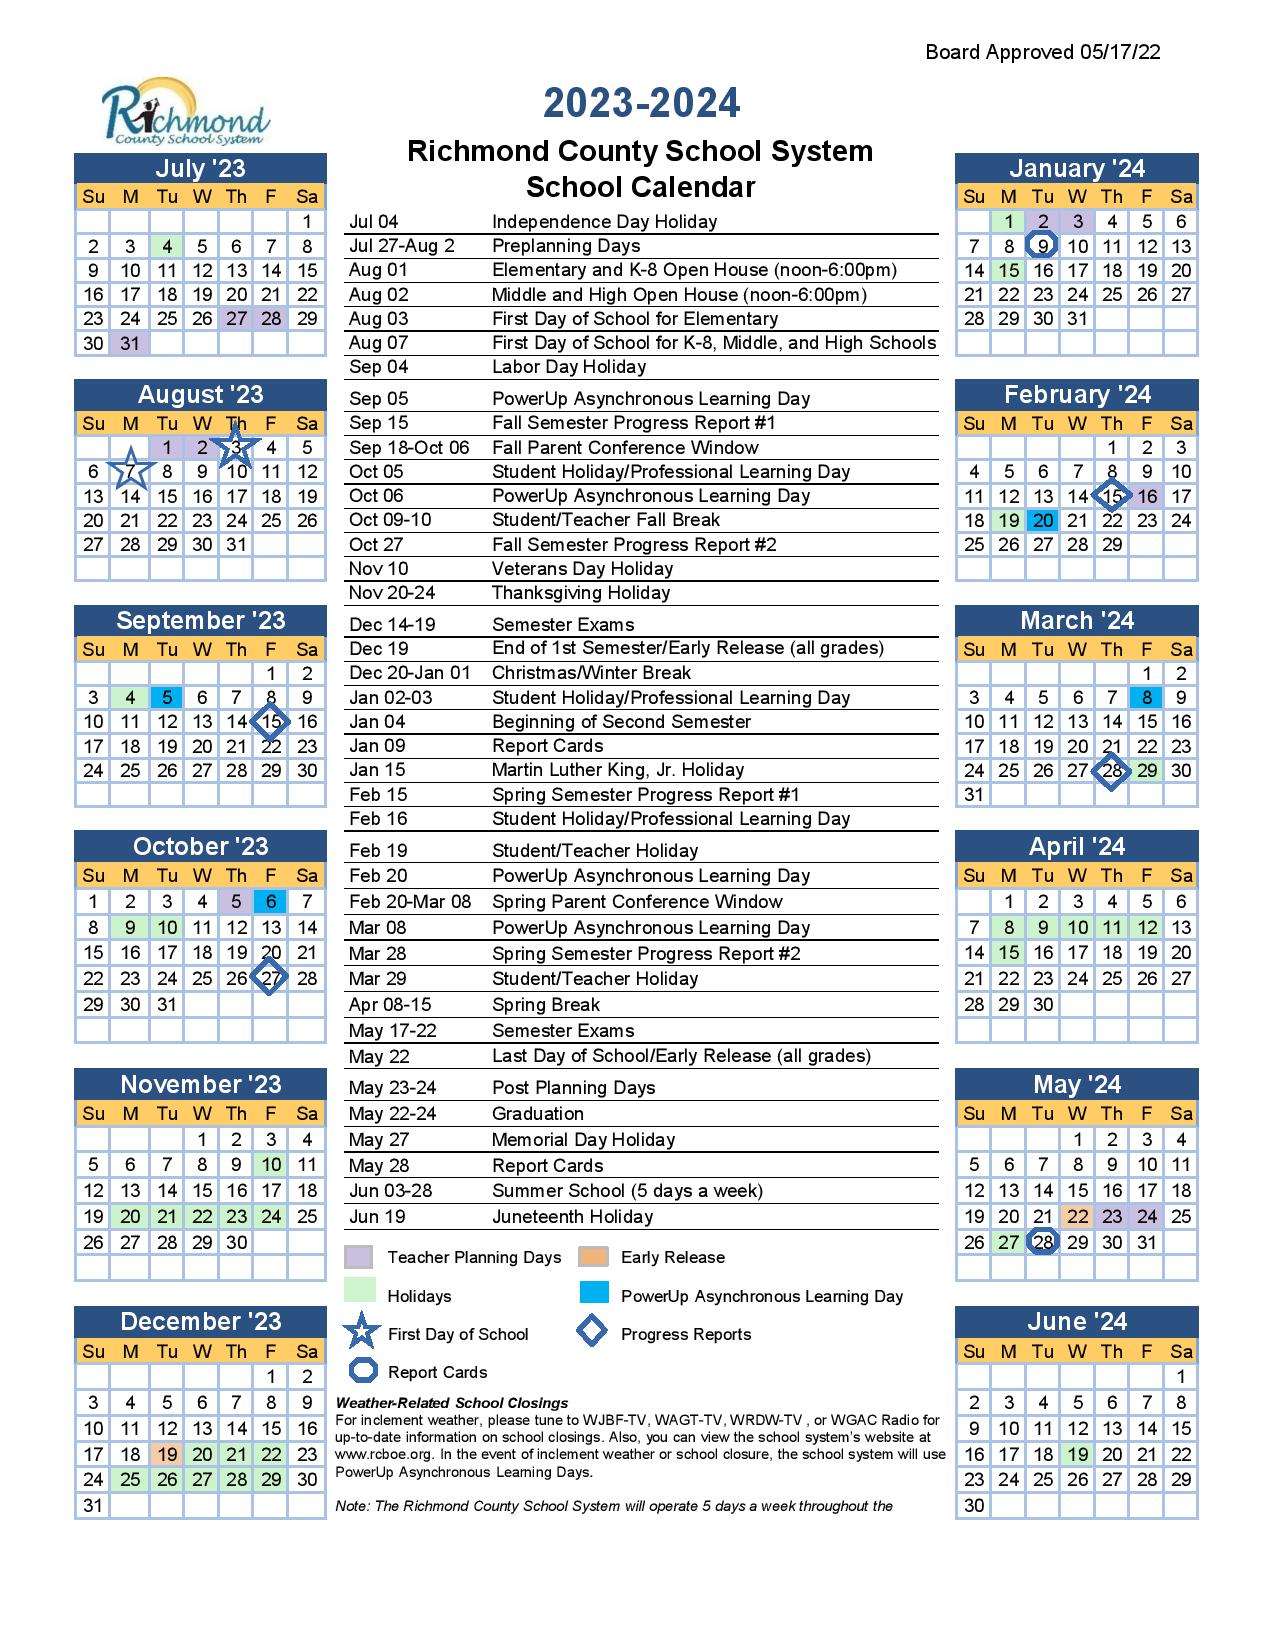 Richmond County Schools Calendar 20232024 (Holiday Breaks)